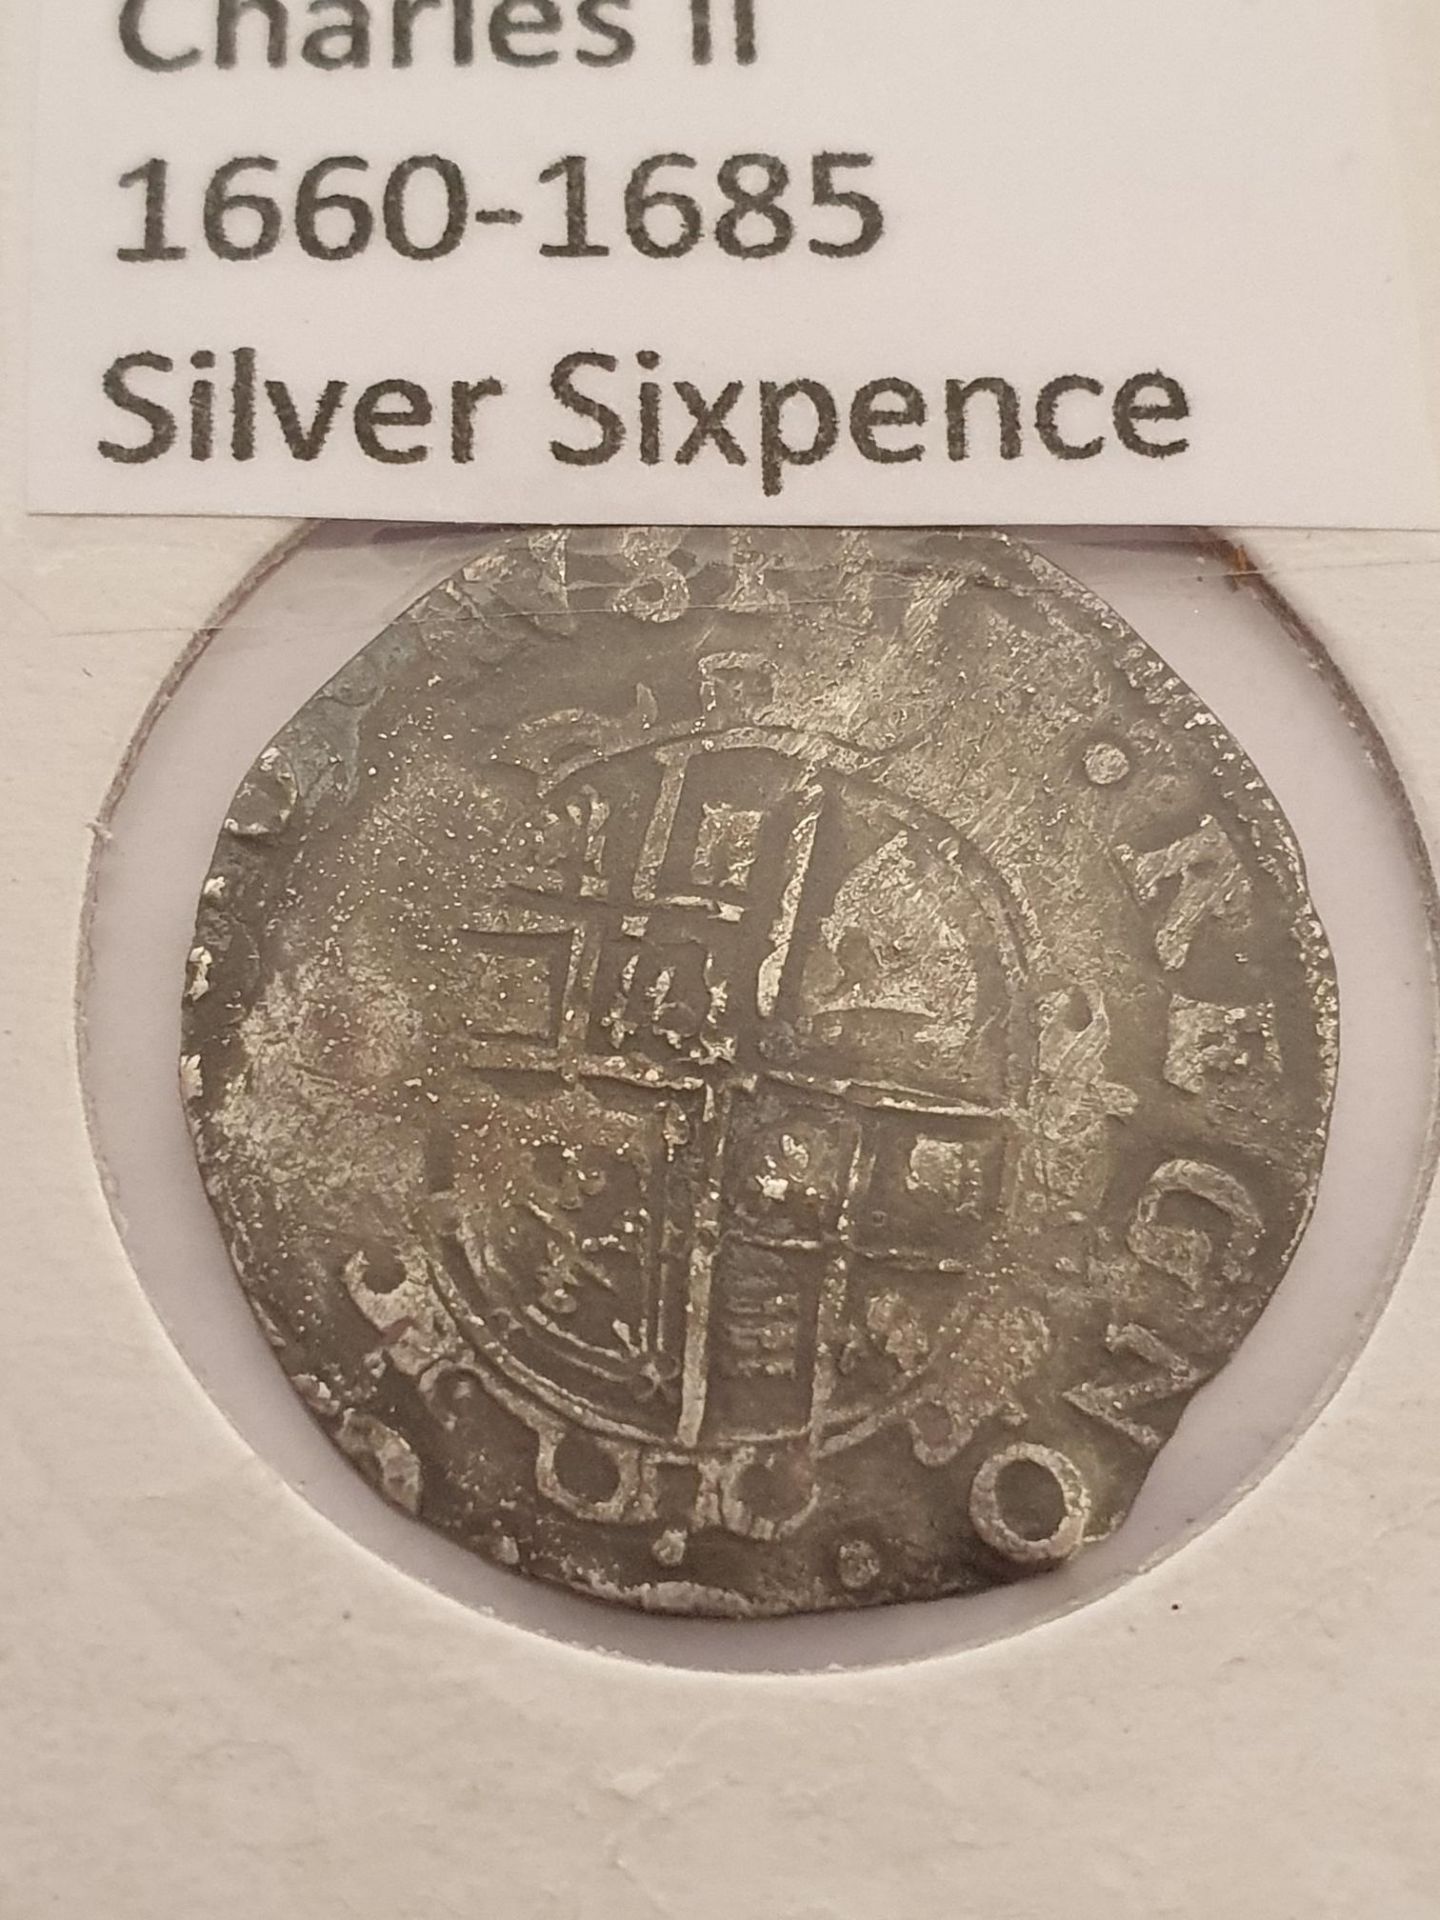 Charles II Silver Sixpence - Image 2 of 3